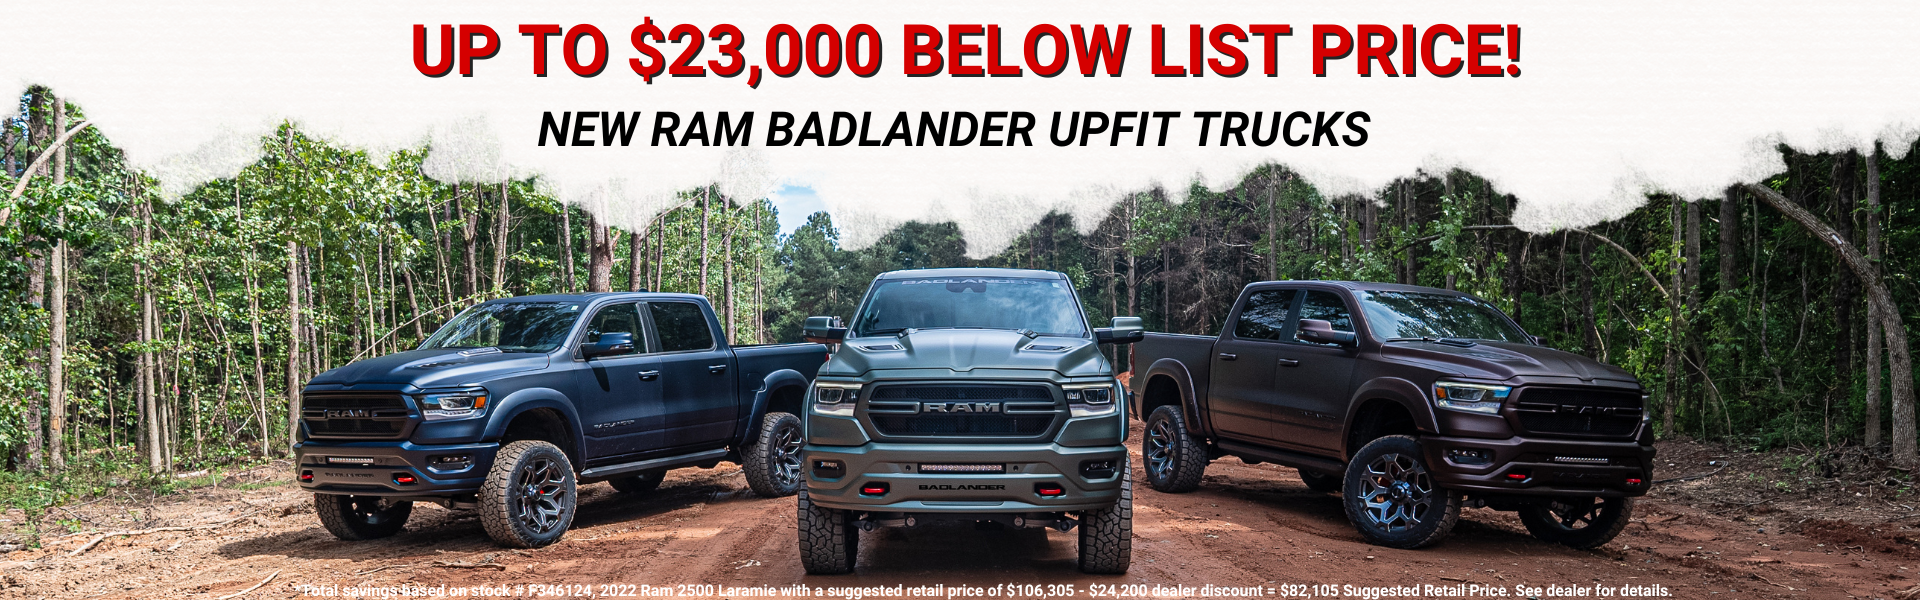 Up to $23,000 Below List Price on New Ram Badlander Upfits